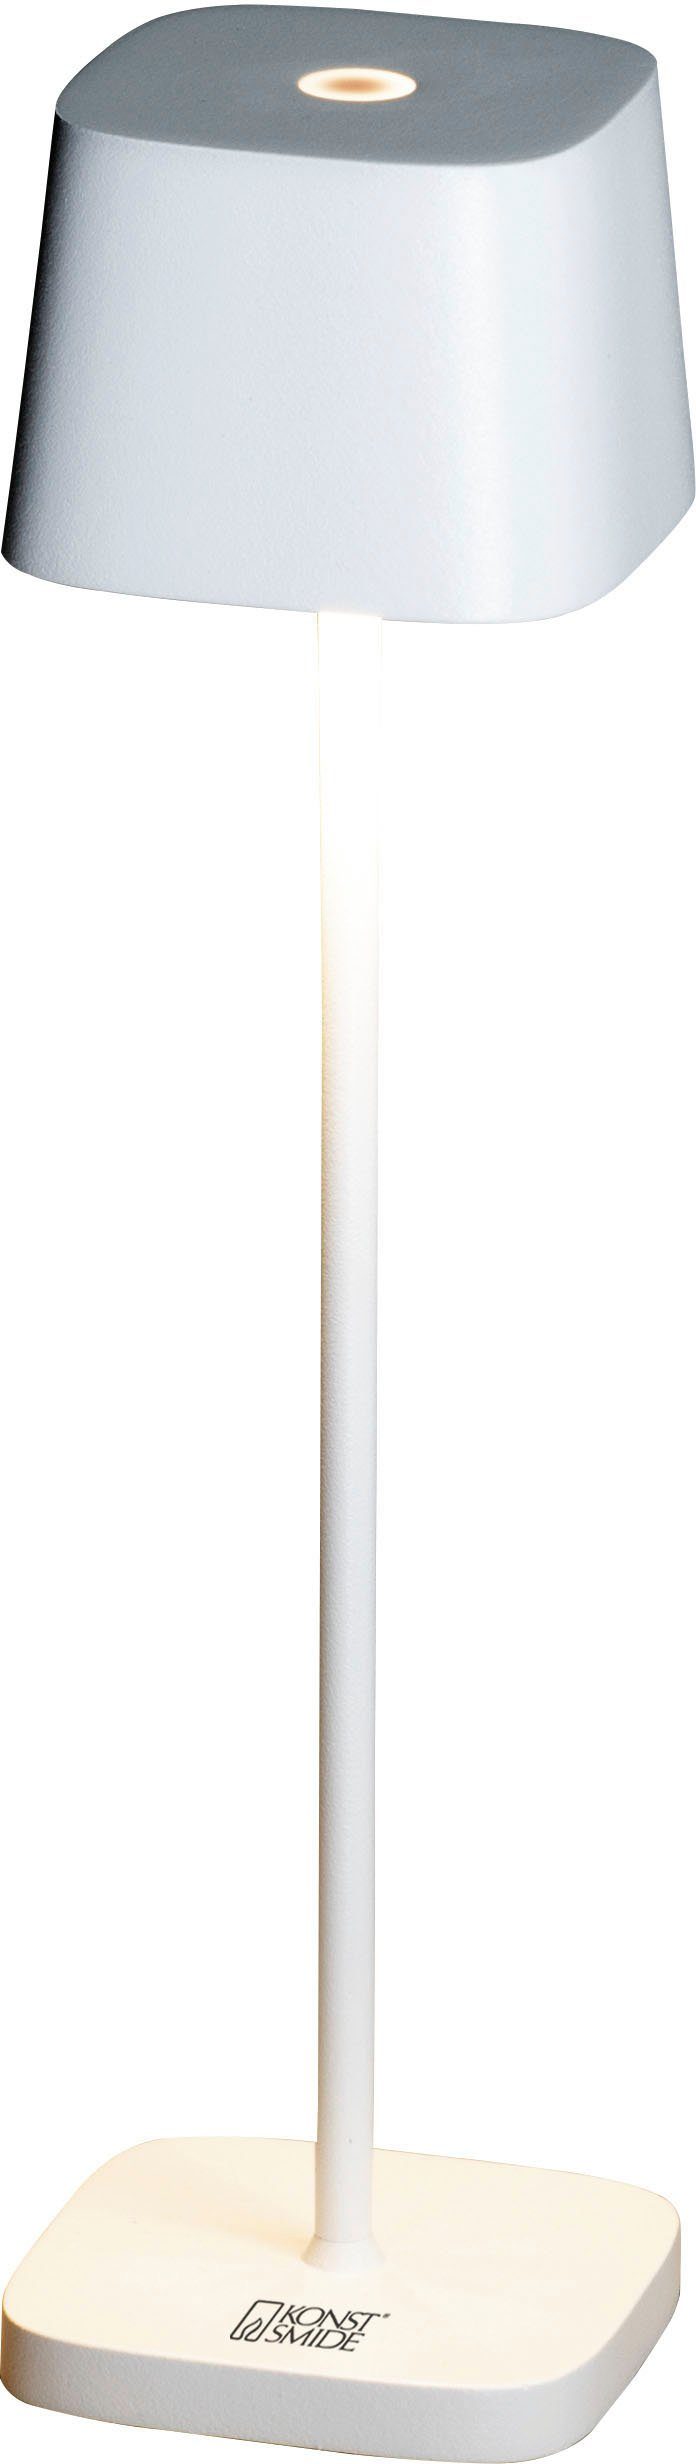 KONSTSMIDE Warmweiß, weiß, dimmbar, LED integriert, USB-Tischl. eckig Capri-Mini, 2700/3000K, LED Tischleuchte fest Capri-Mini